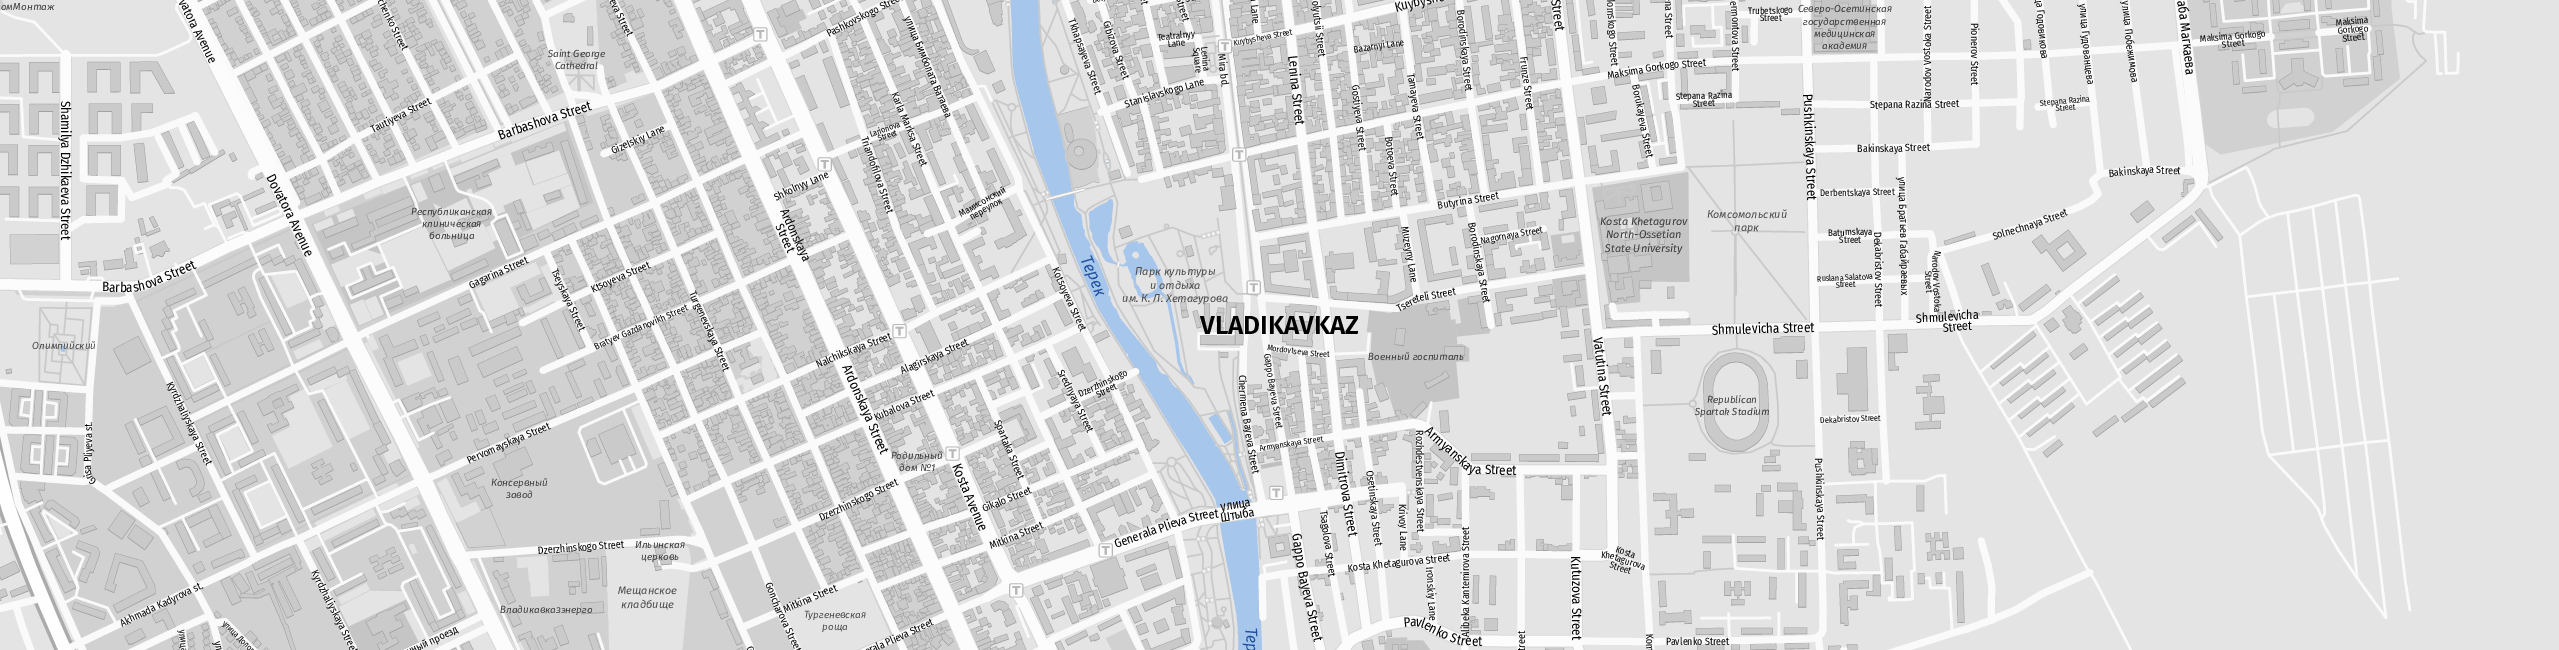 Stadtplan Vladikavkaz zum Downloaden.